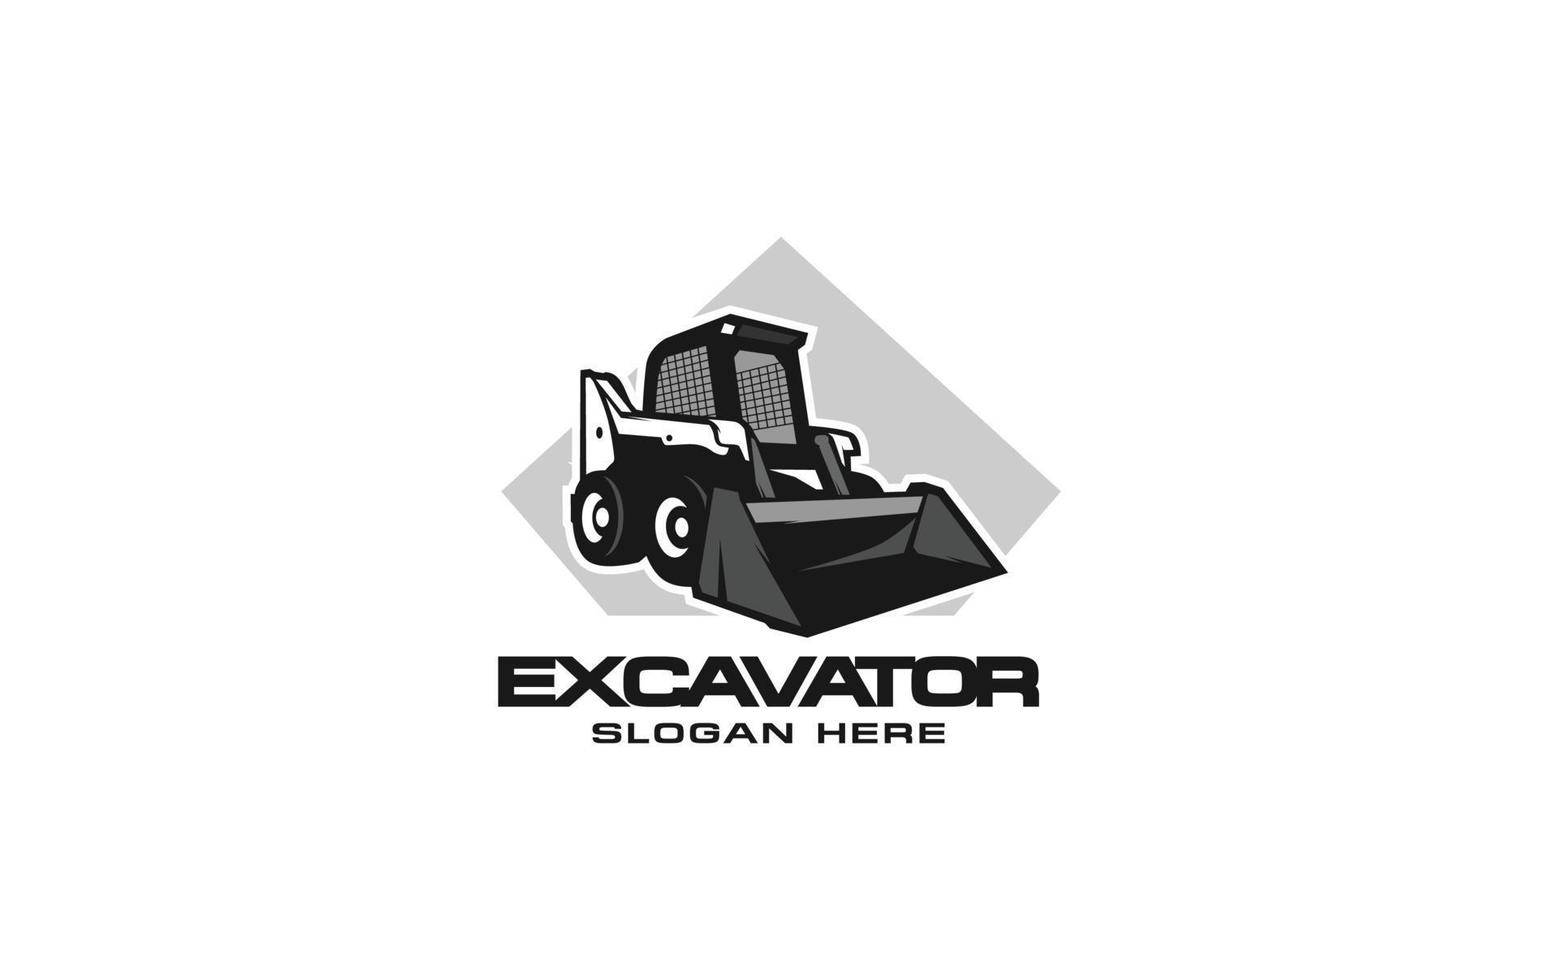 Excavator skid steer logo template vector. Heavy equipment logo vector for construction company. Creative excavator illustration for logo template.